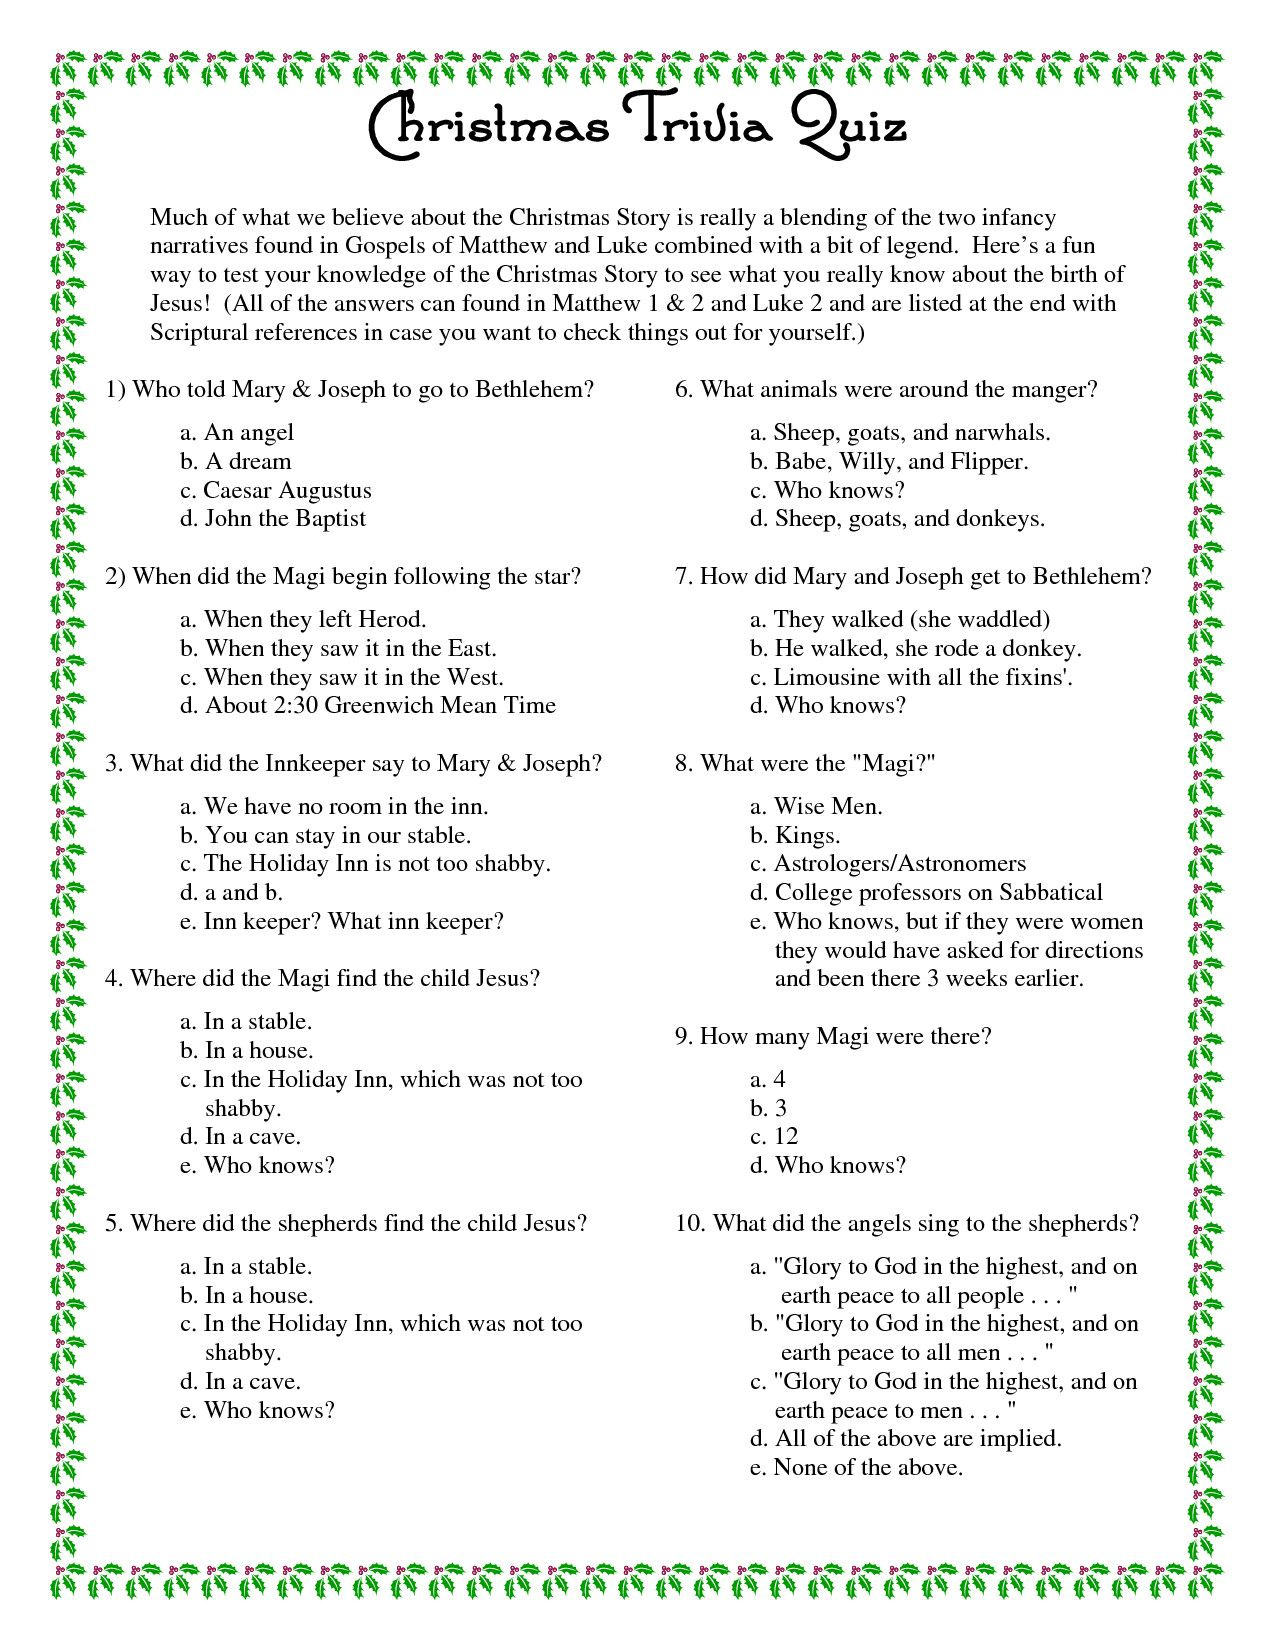 Printable Bible Christmas Trivia Questions And Answers